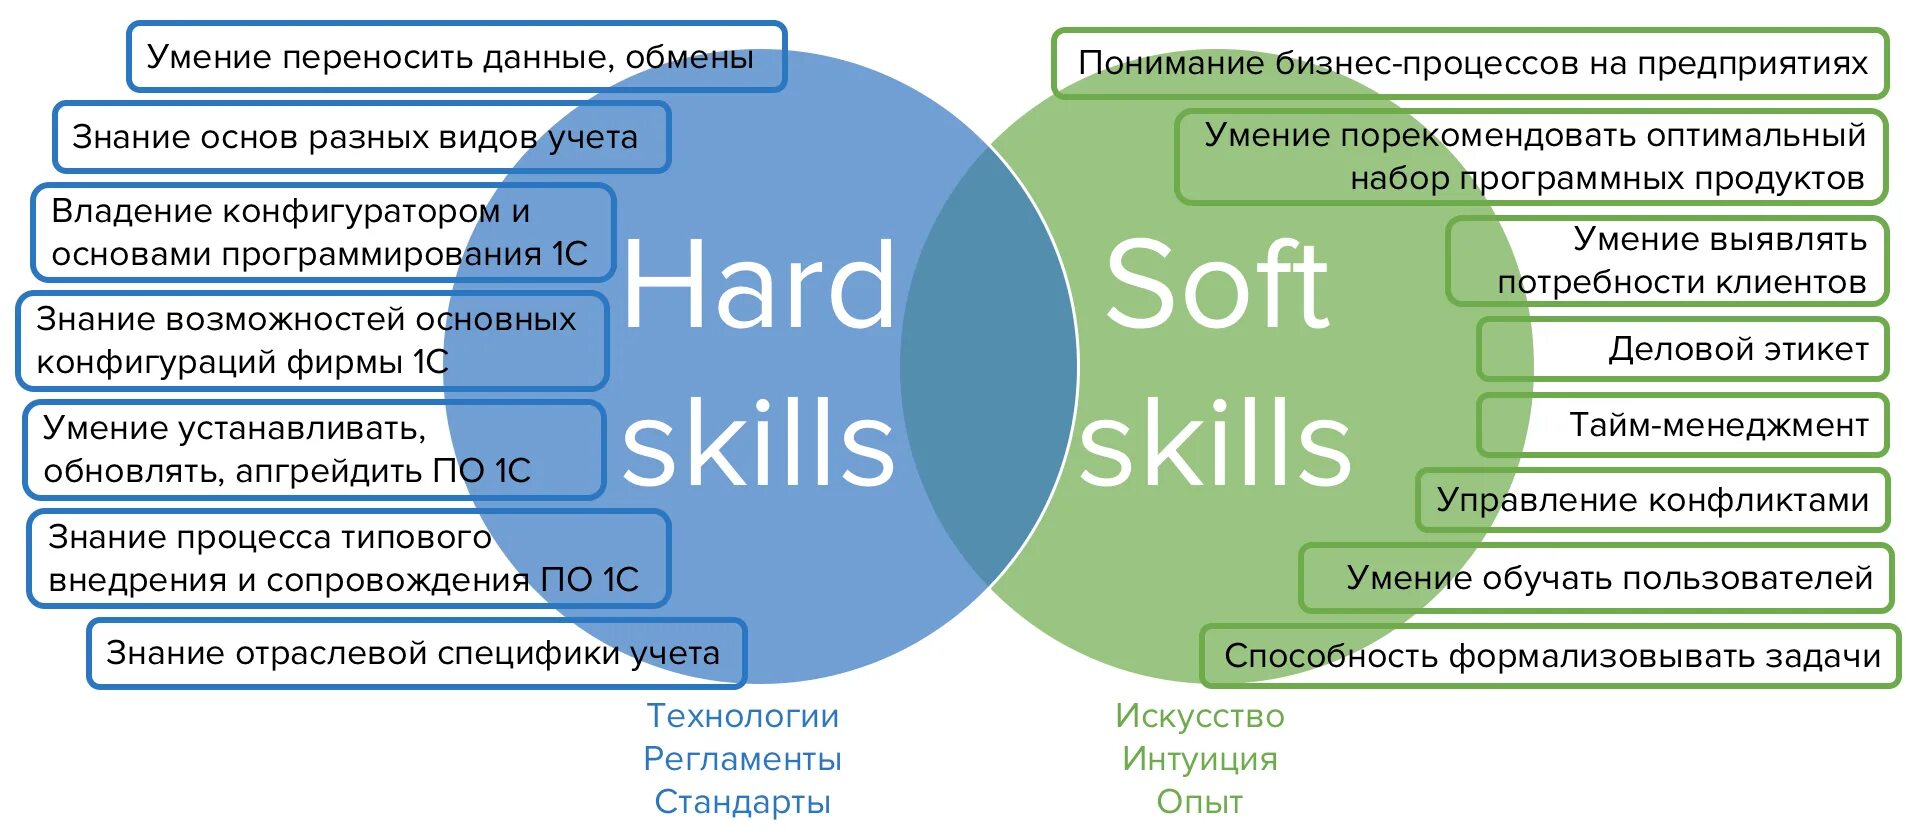 Description где. Hard skills и Soft skills. Навыки Хард и софт Скиллс. Компетенции педагога hard skills Soft skills. Софт и Хард компетенции.